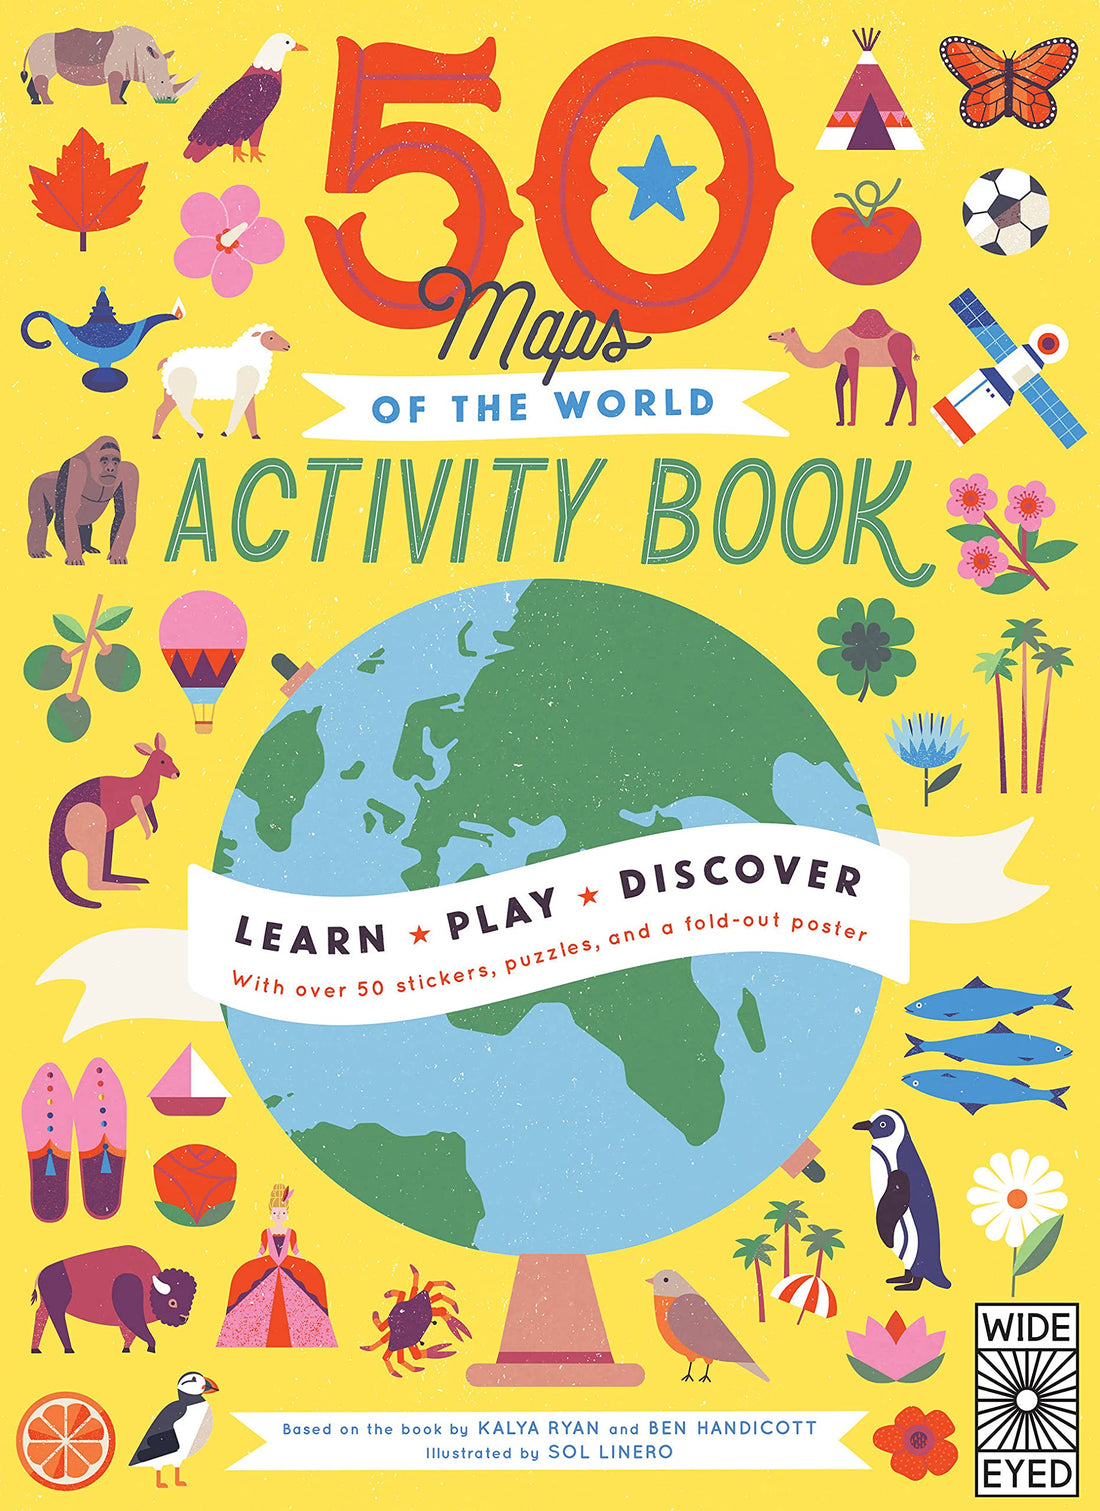 50 Maps of the World Activity Book - Parkette.